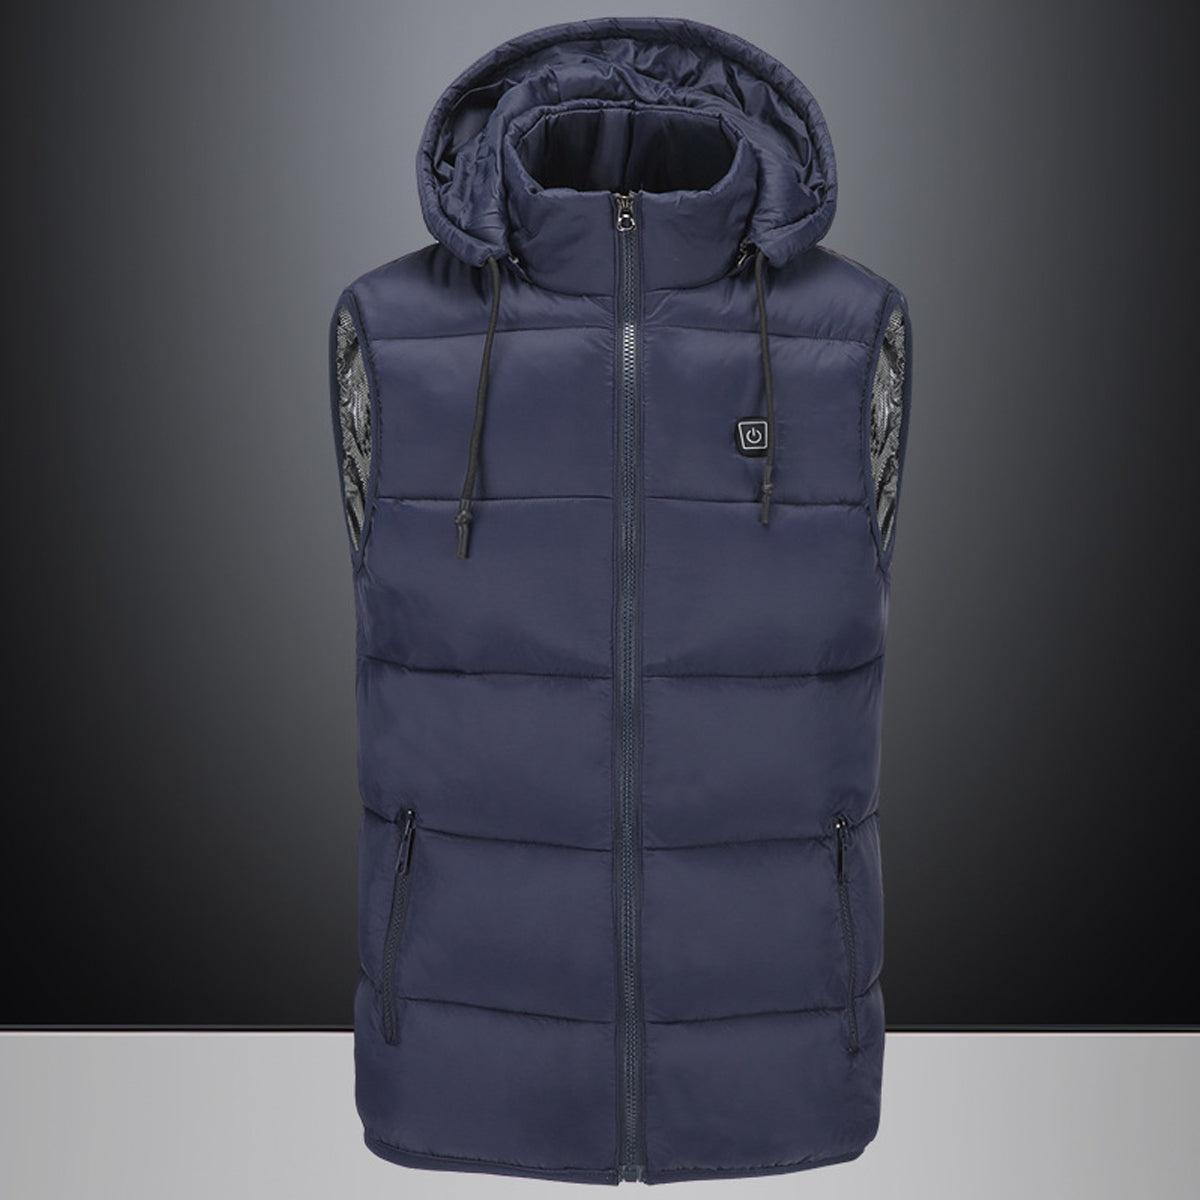 Dark Slate Gray 25-45°C Electric Heated Vest Waistcoat Hooded Winter Warmer USB Charge Heating Jacket Clothing